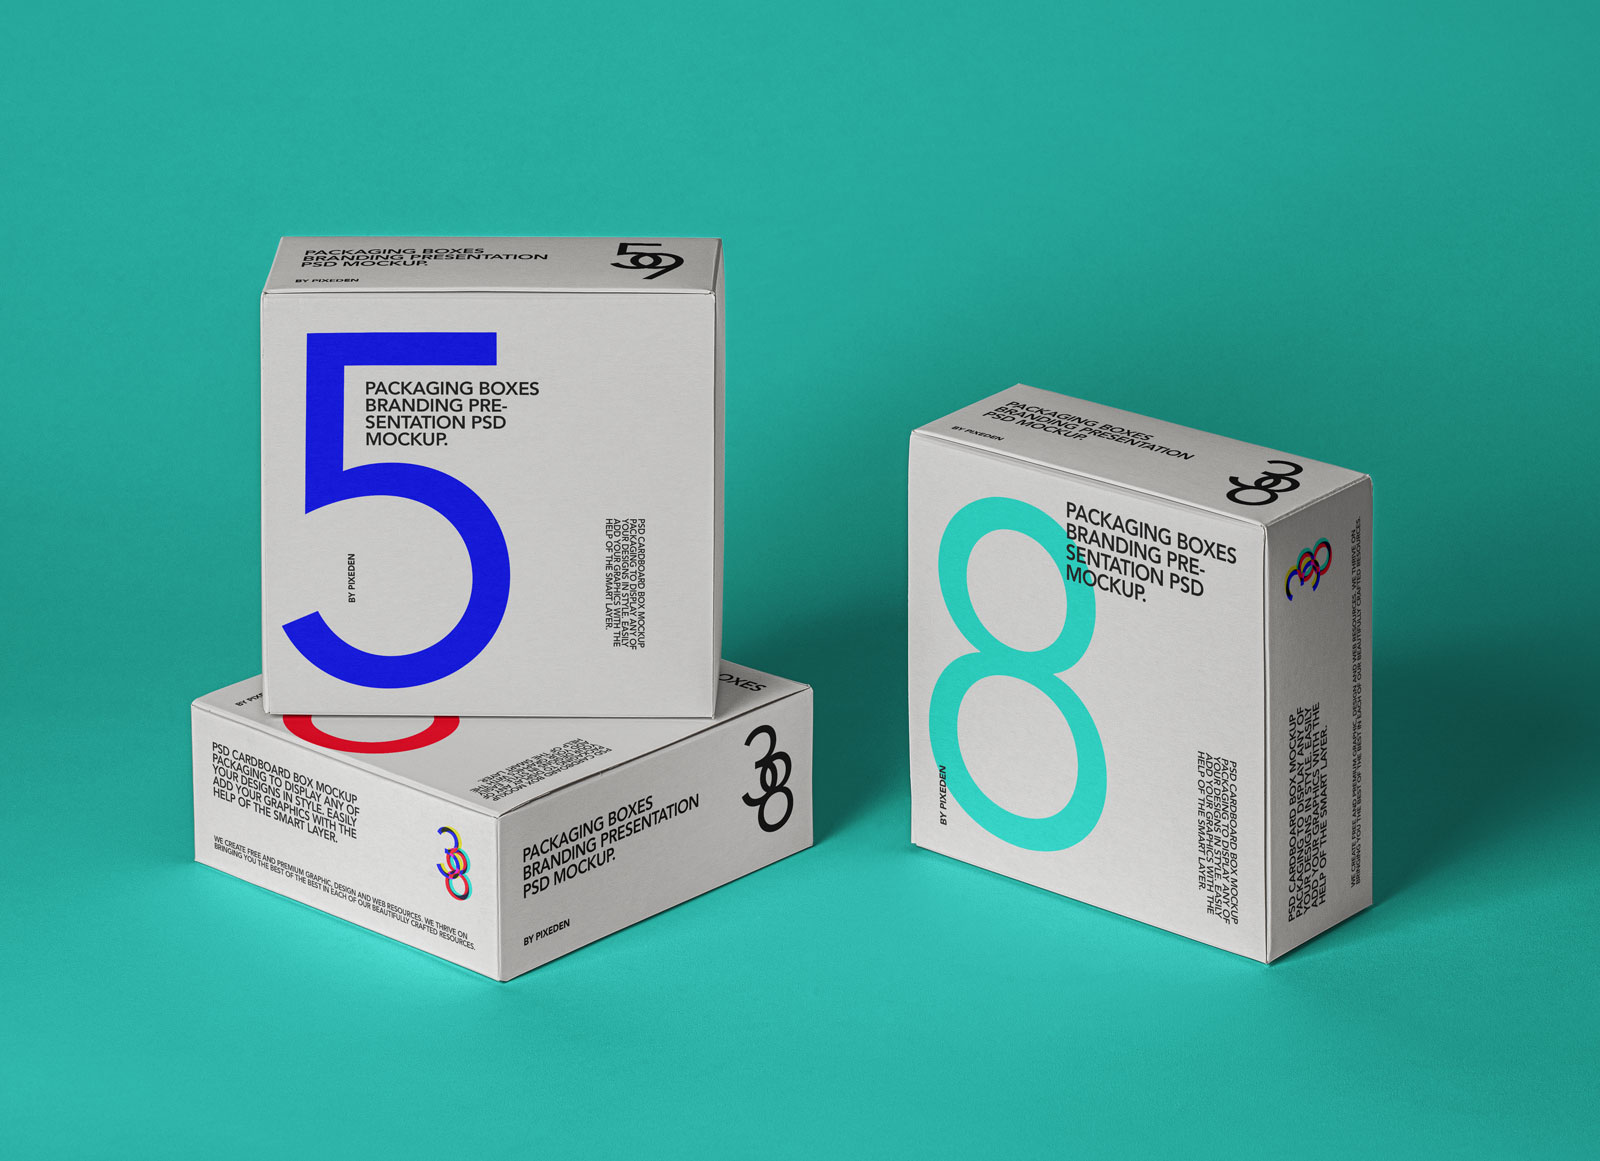 Free-Cardboard-Packaging-Boxes-Mockup-Presentation-PSD